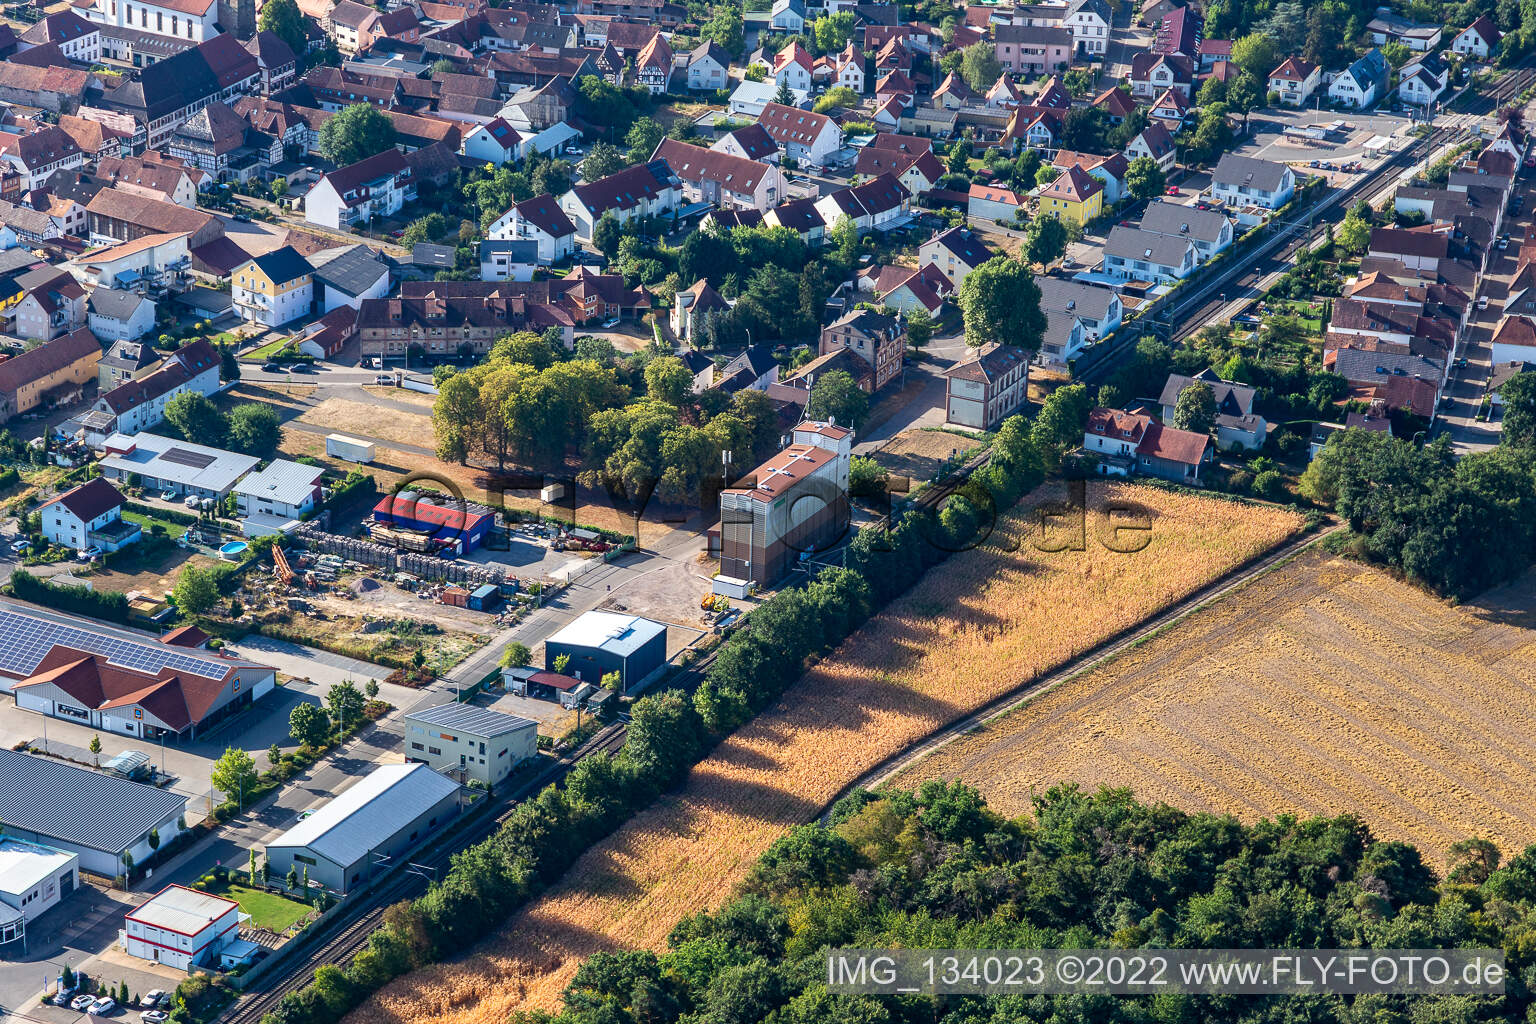 Drone recording of Rheinzabern in the state Rhineland-Palatinate, Germany